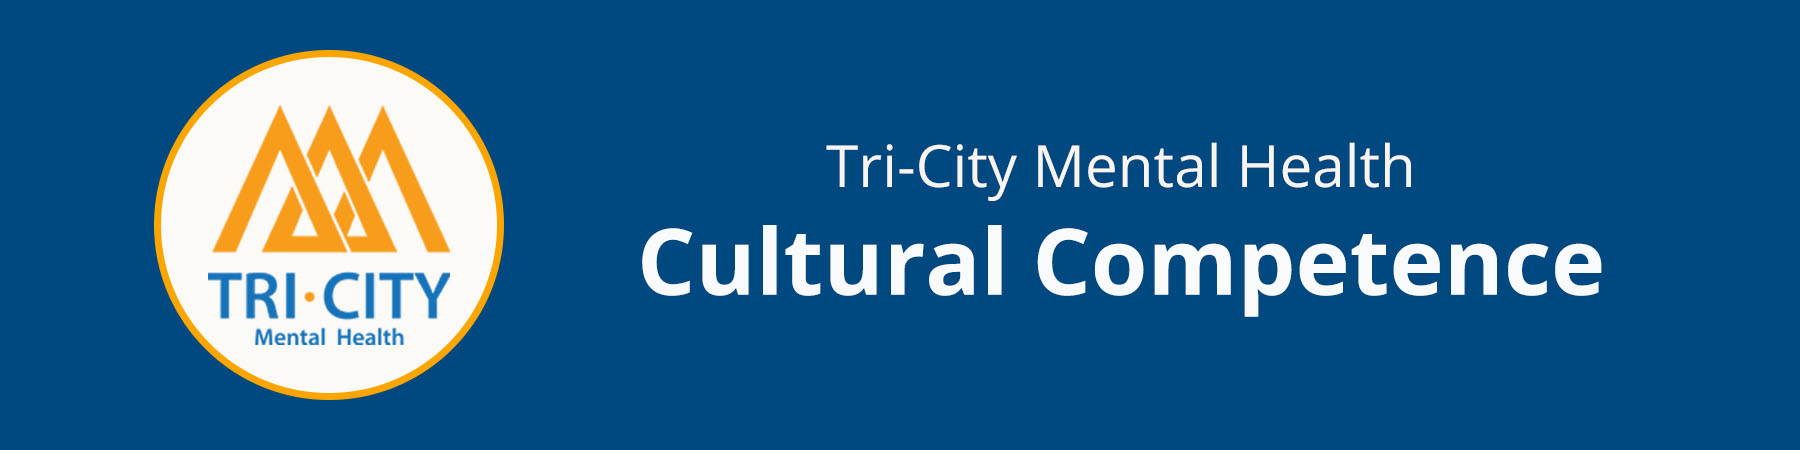 Tri-City Mental Health Cultural Competence